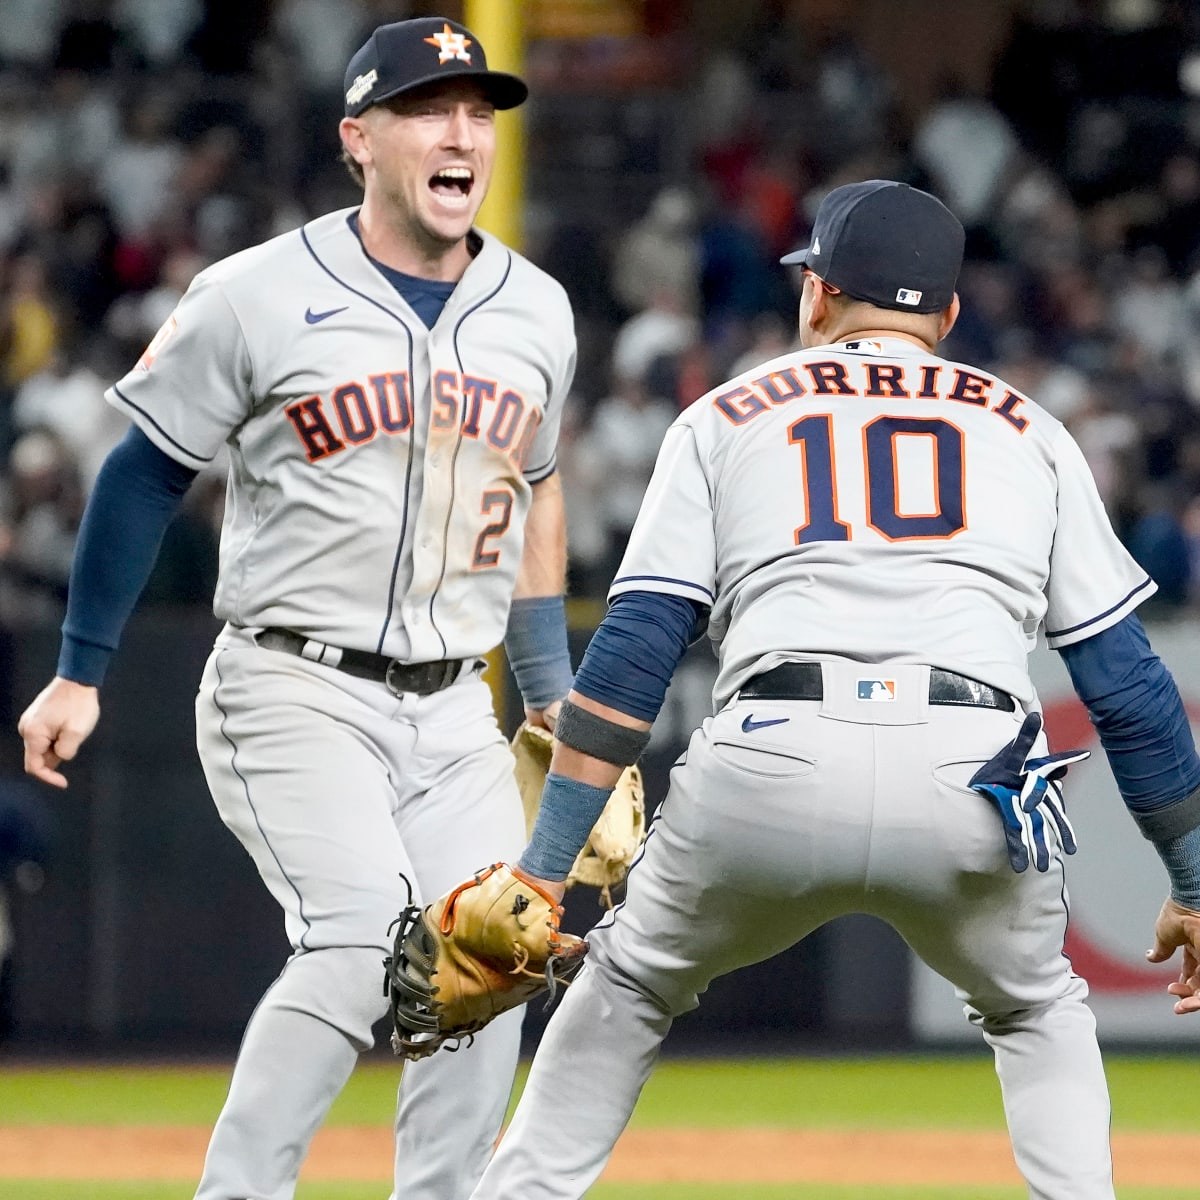 Detroit Tigers vs. World Series champion Houston Astros in fun series